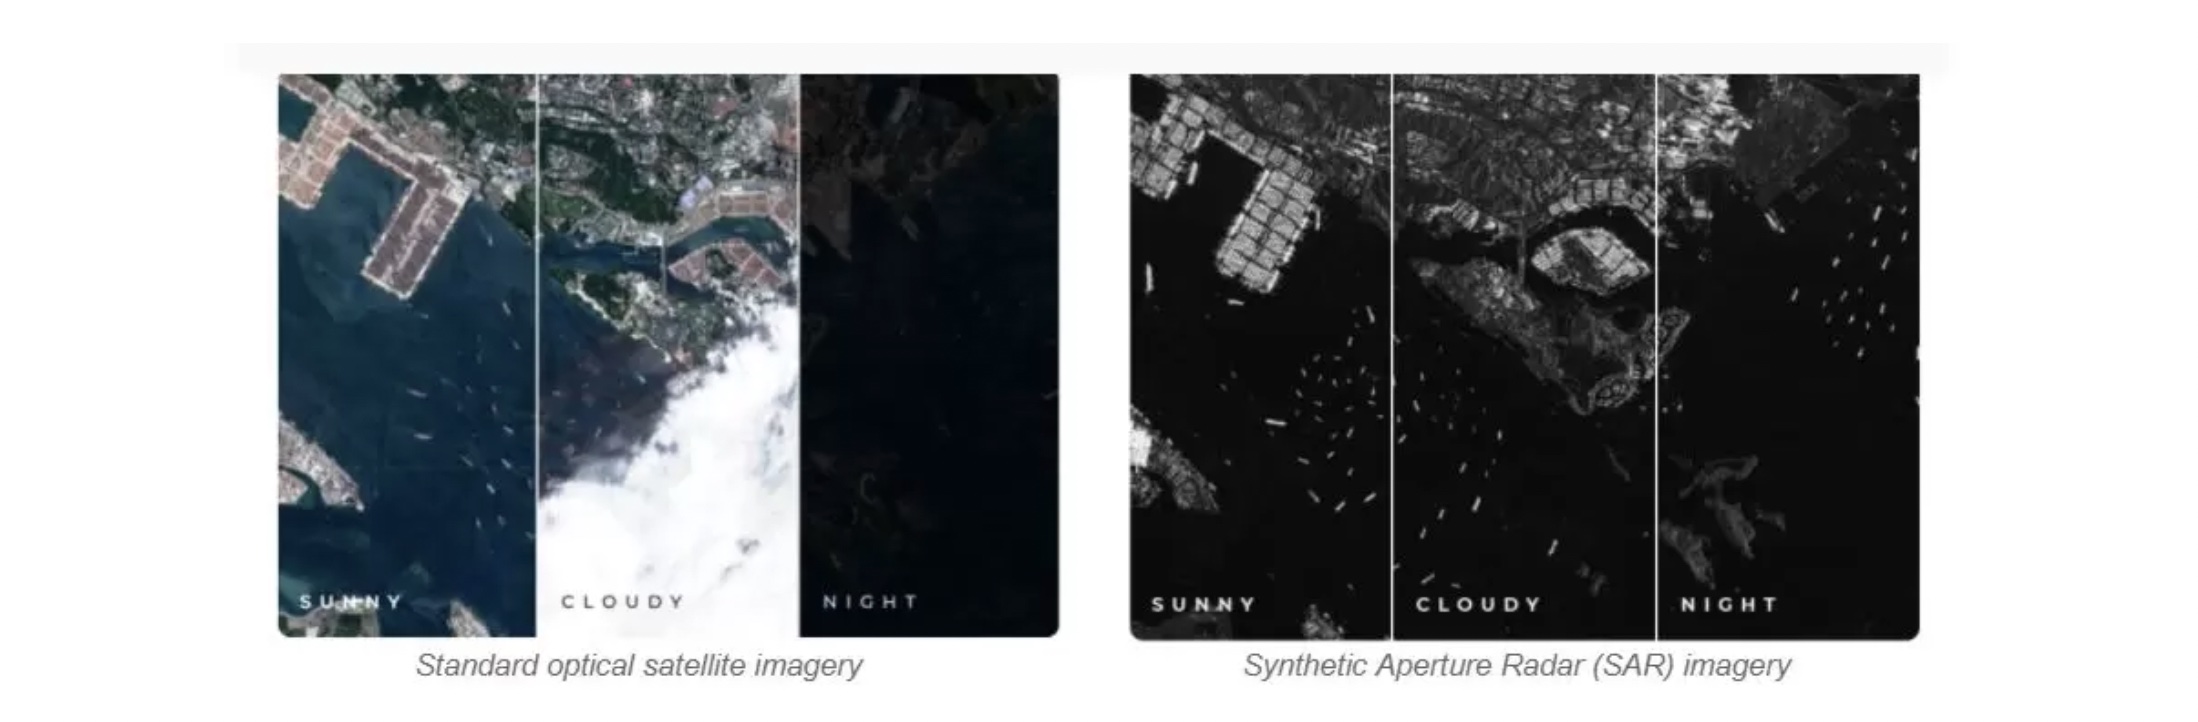 Optical satellite imagery versus Synthetic Aperture Radar (SAR) imagery